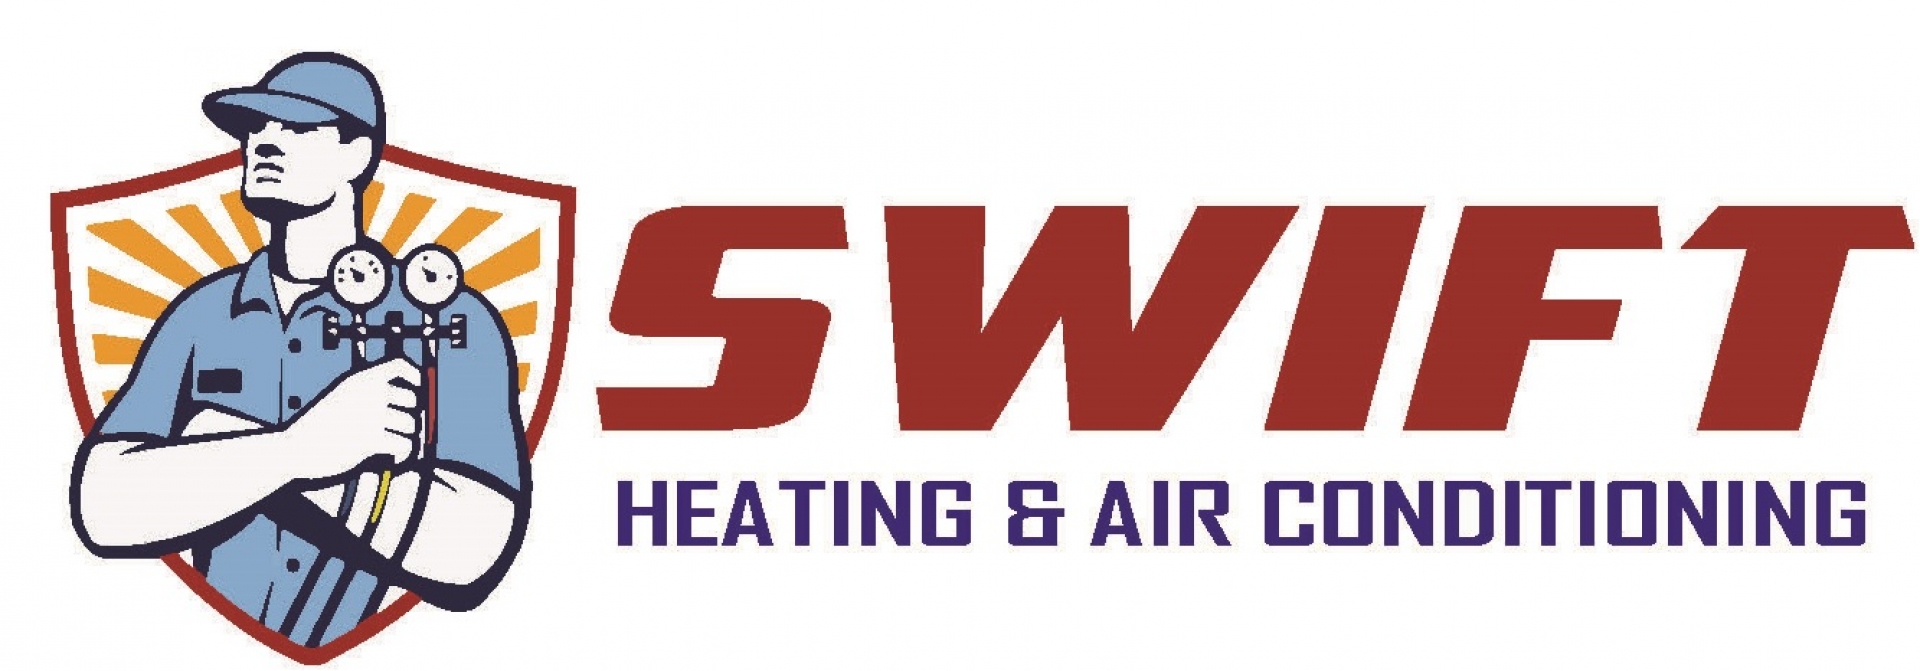 Swift Hvac company logo